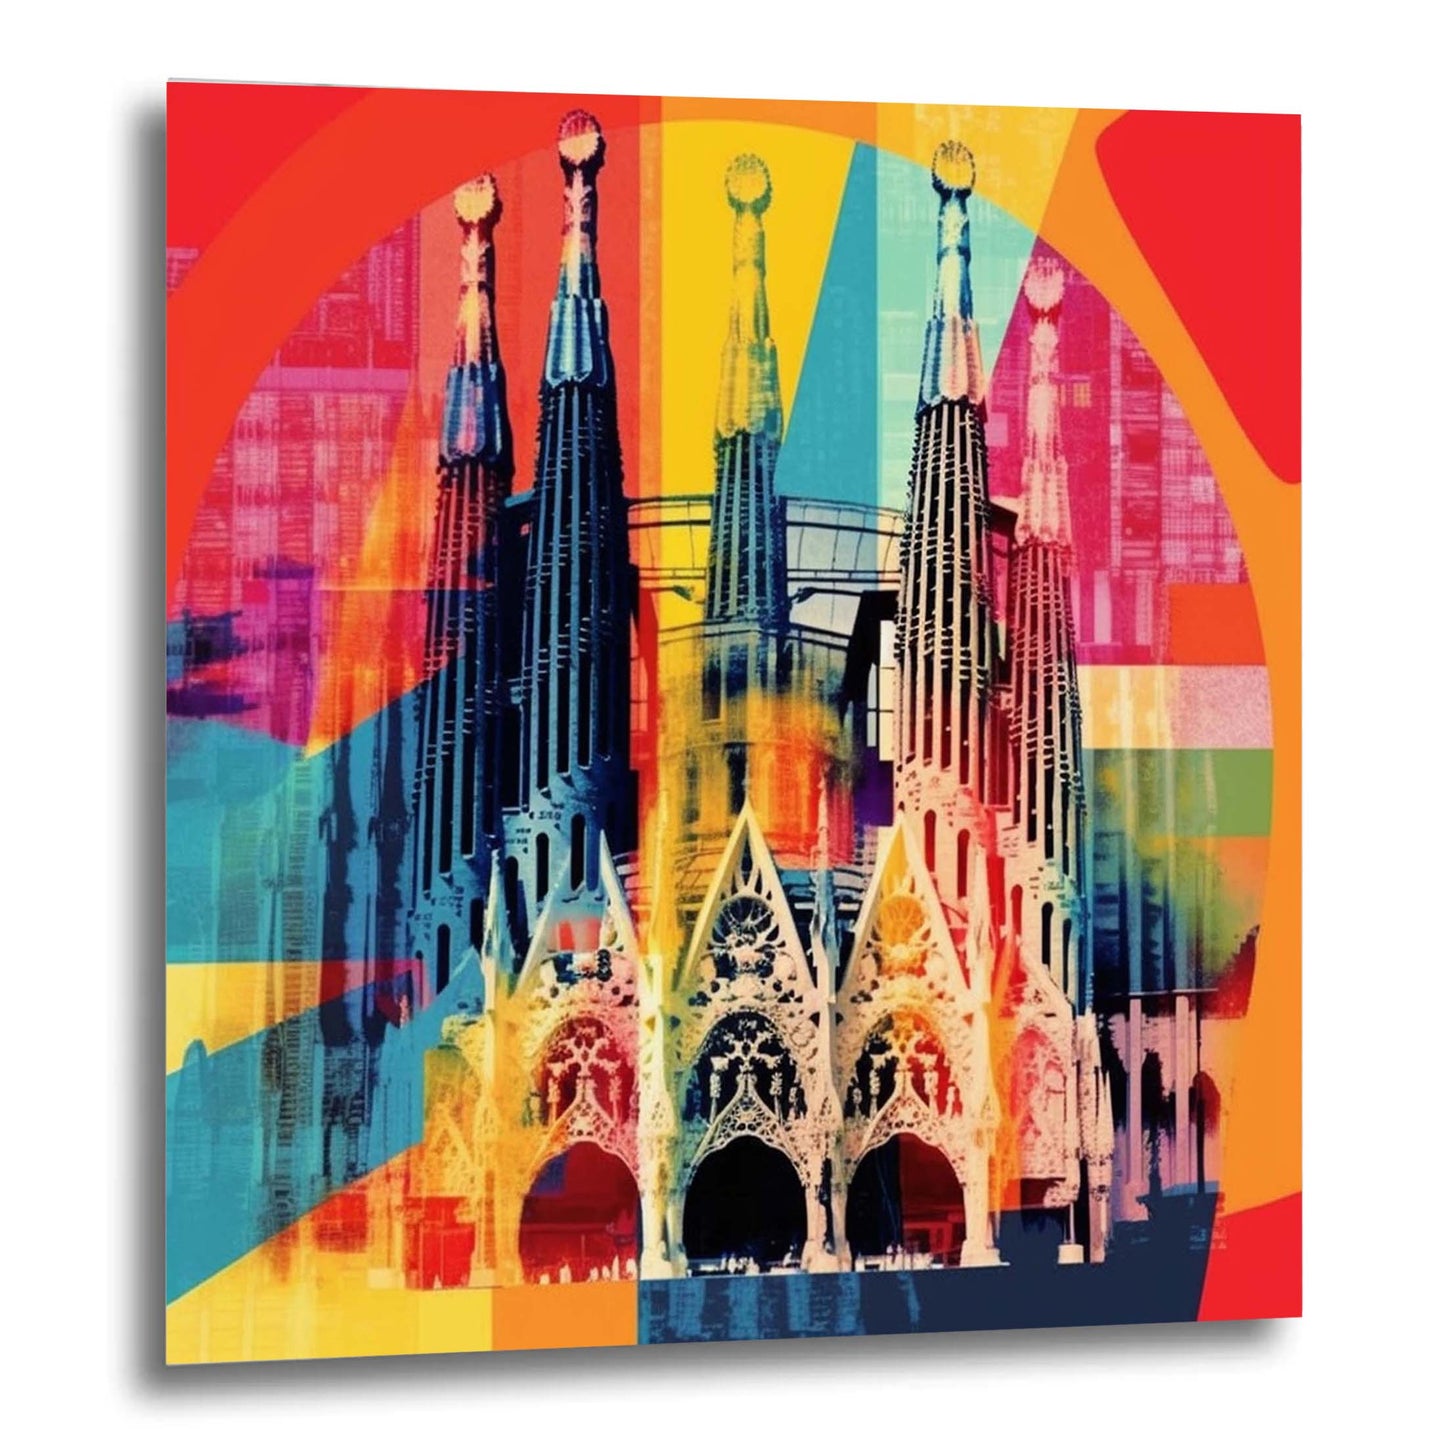 Barcelona Sagrada Familia - mural in pop art style